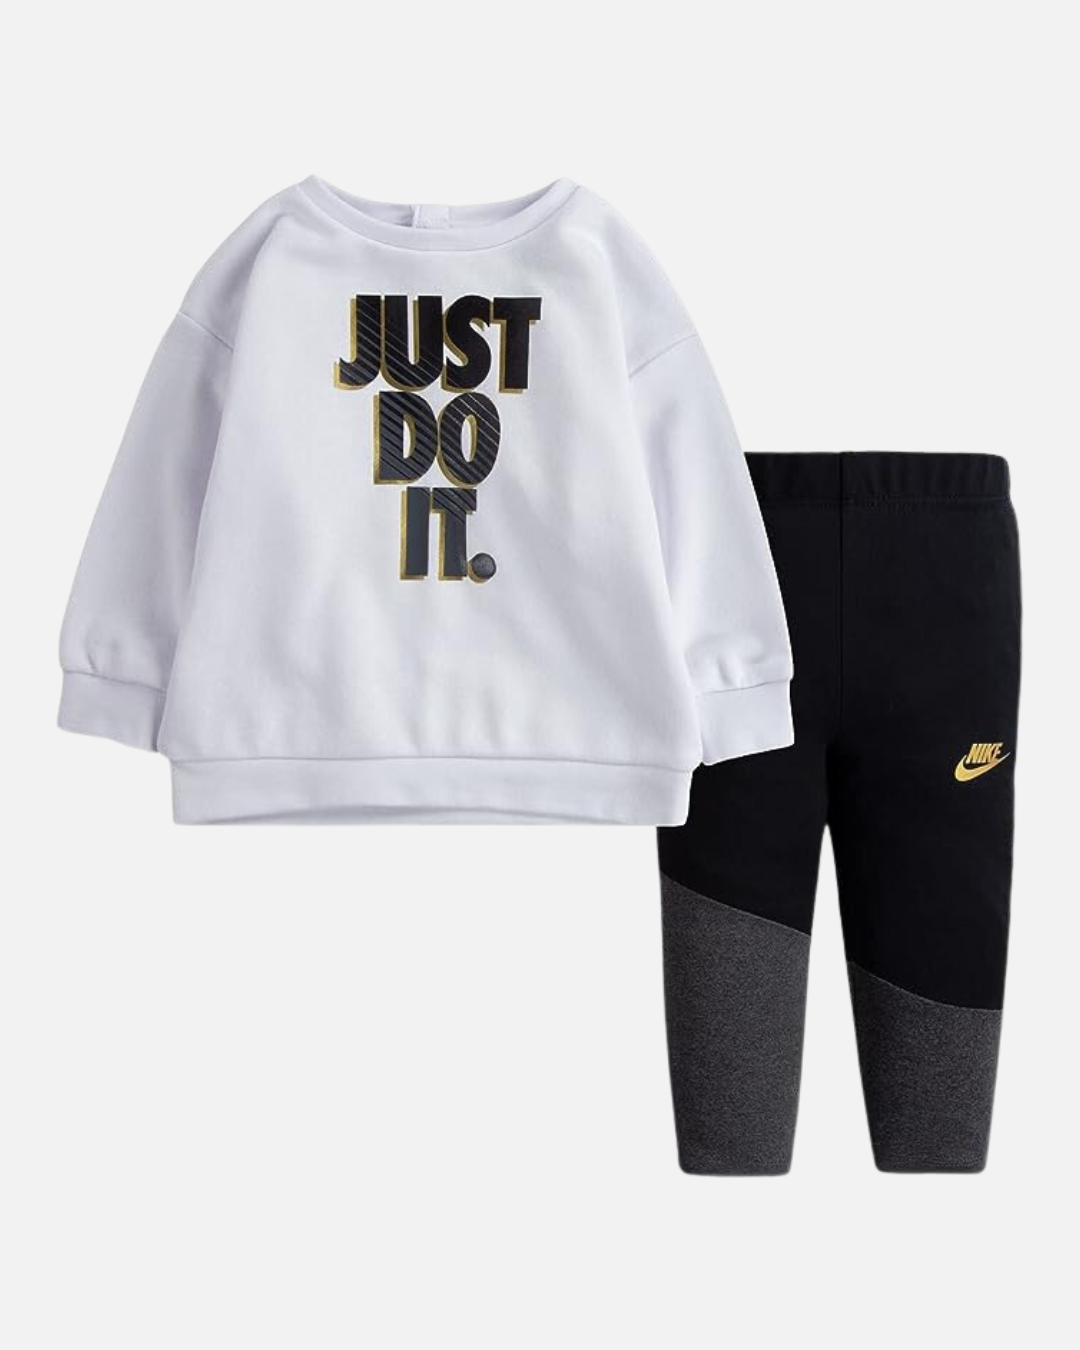 Nike Baby Sweat and Leggings Set - White/Black/Gold